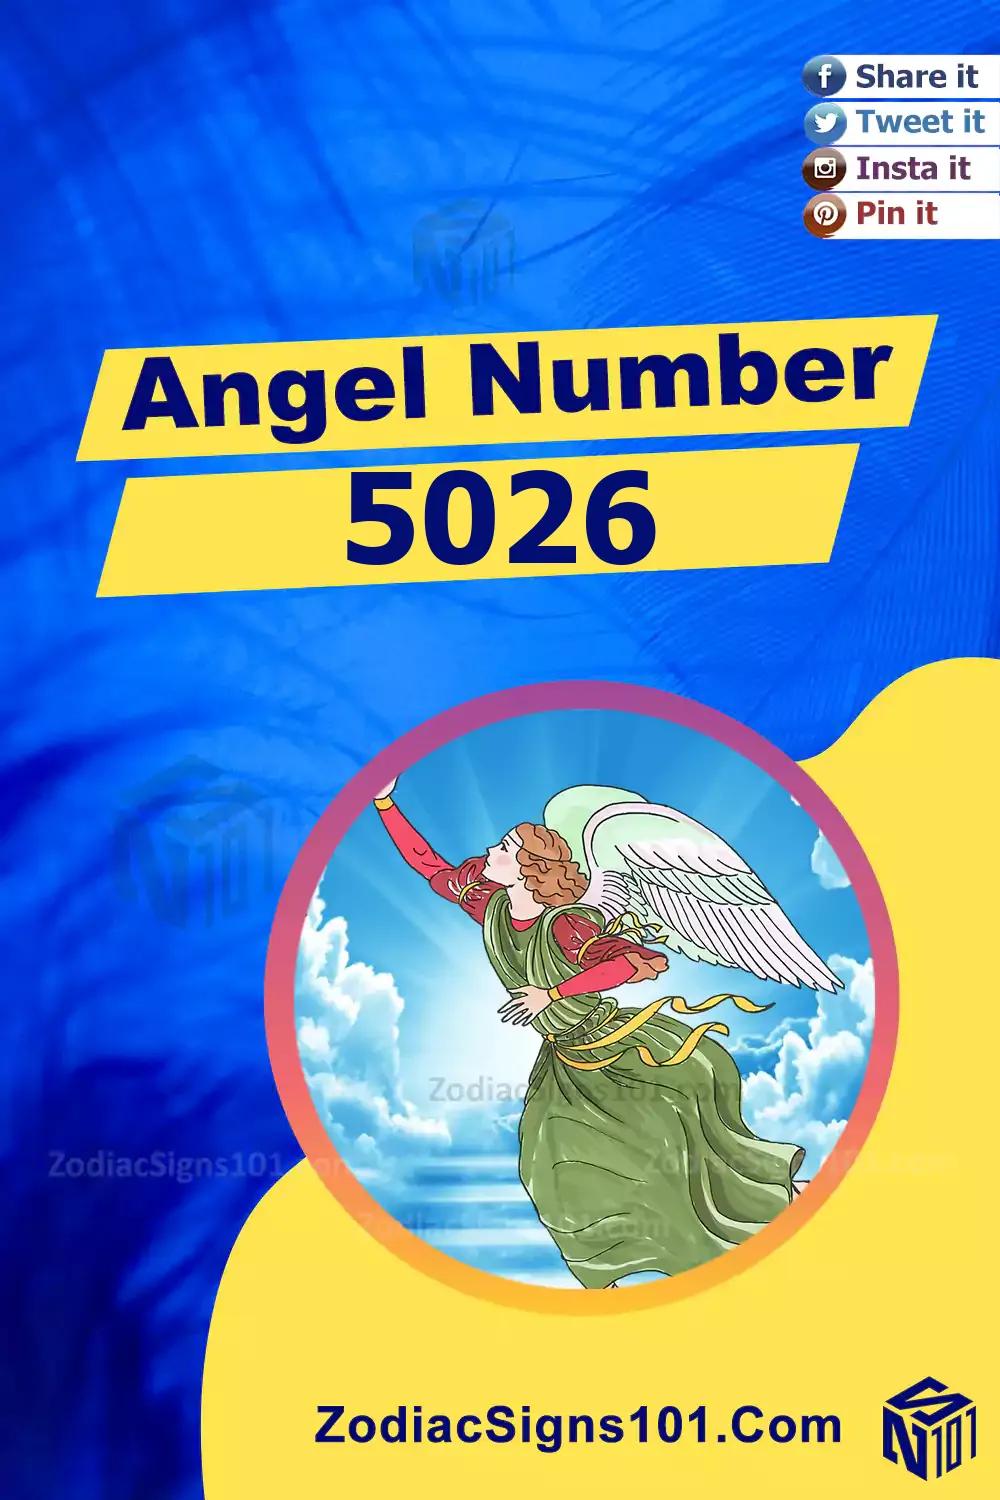 5026-Angel-Number-Meaning.jpg